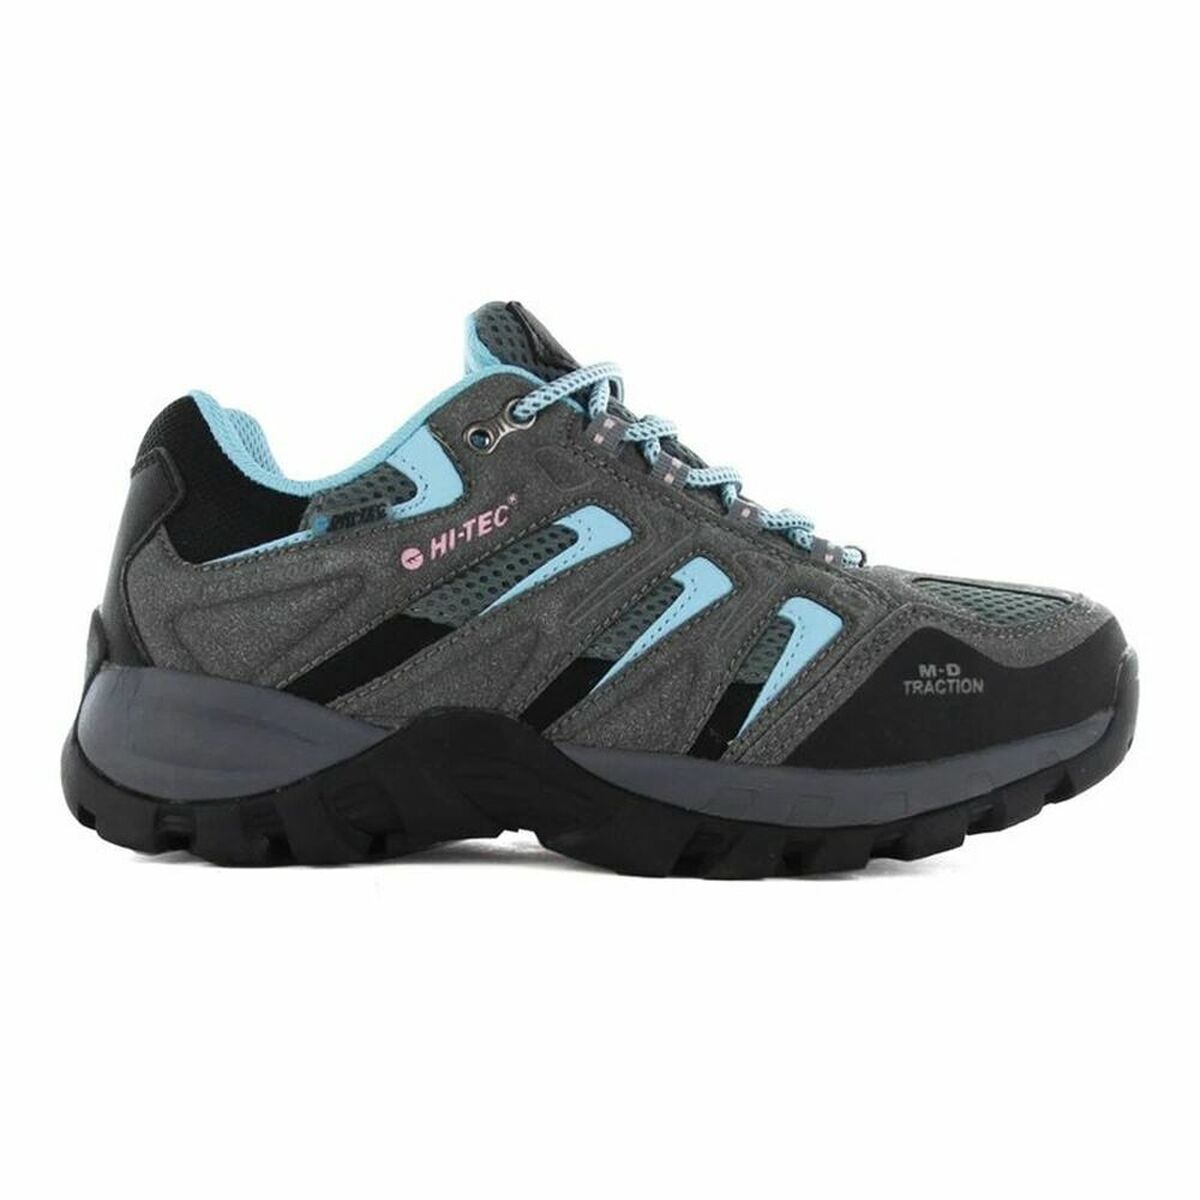 Walking Shoes for Men Hi-Tec Torca Low WP Wo´s W Dark grey